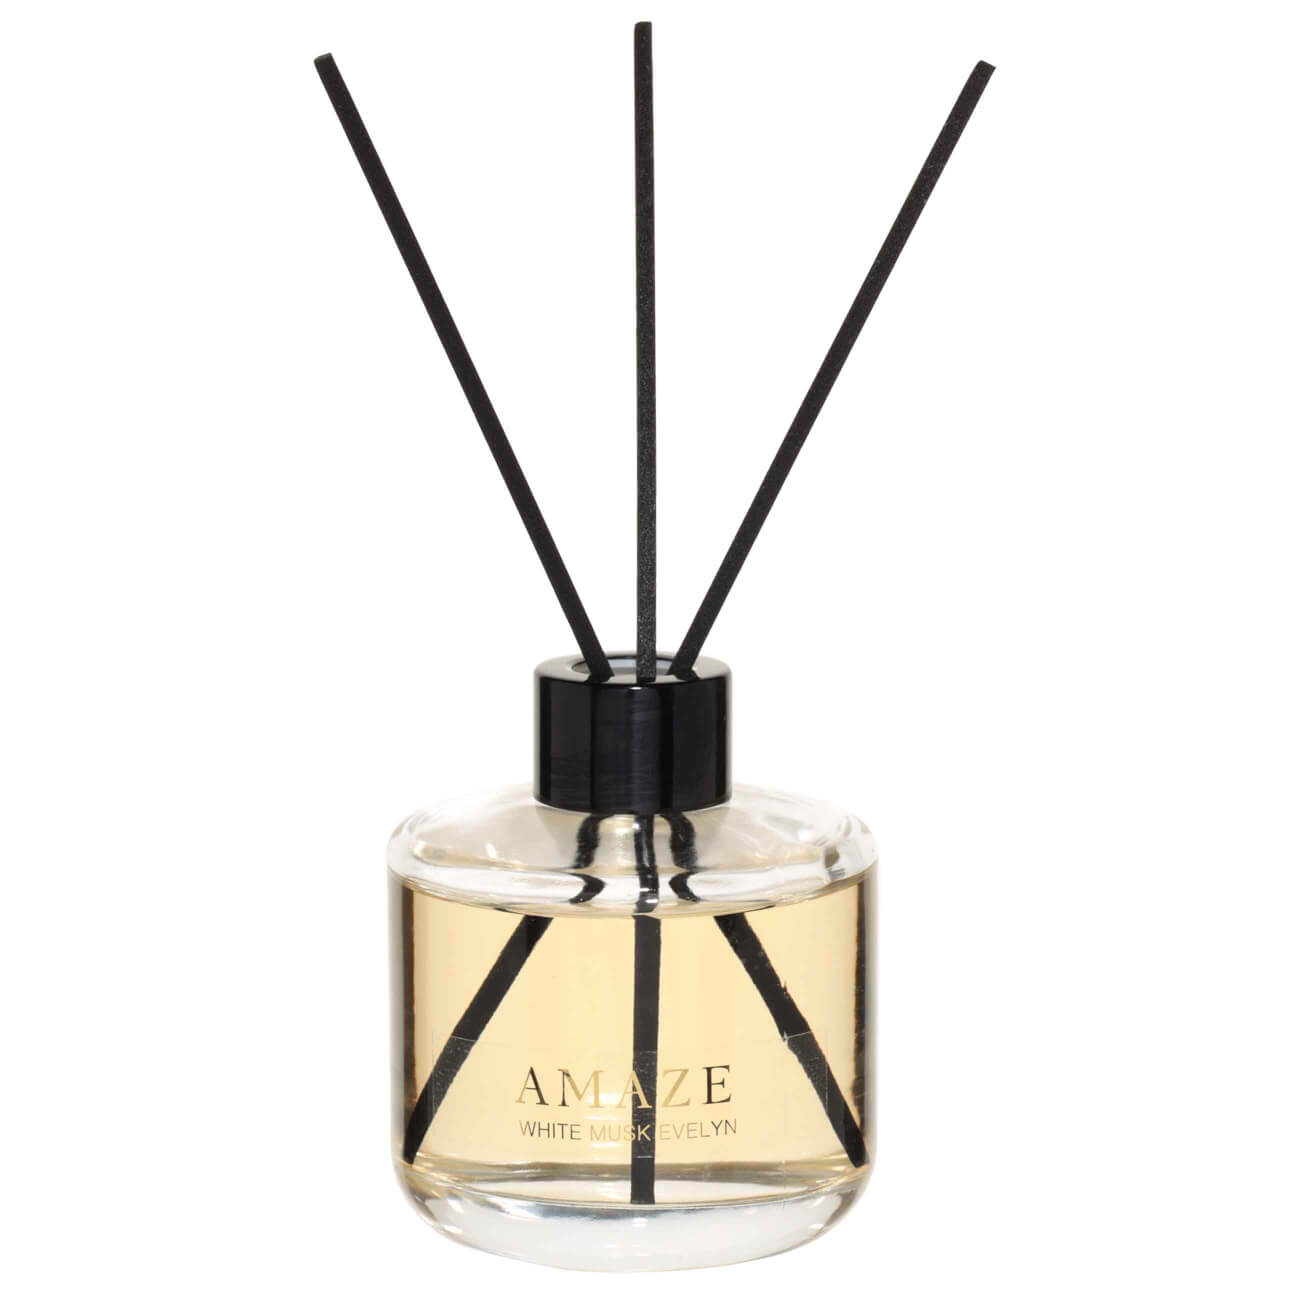 Perfume diffuser, 150 ml, White Musk Evelyn, Amaze изображение № 1